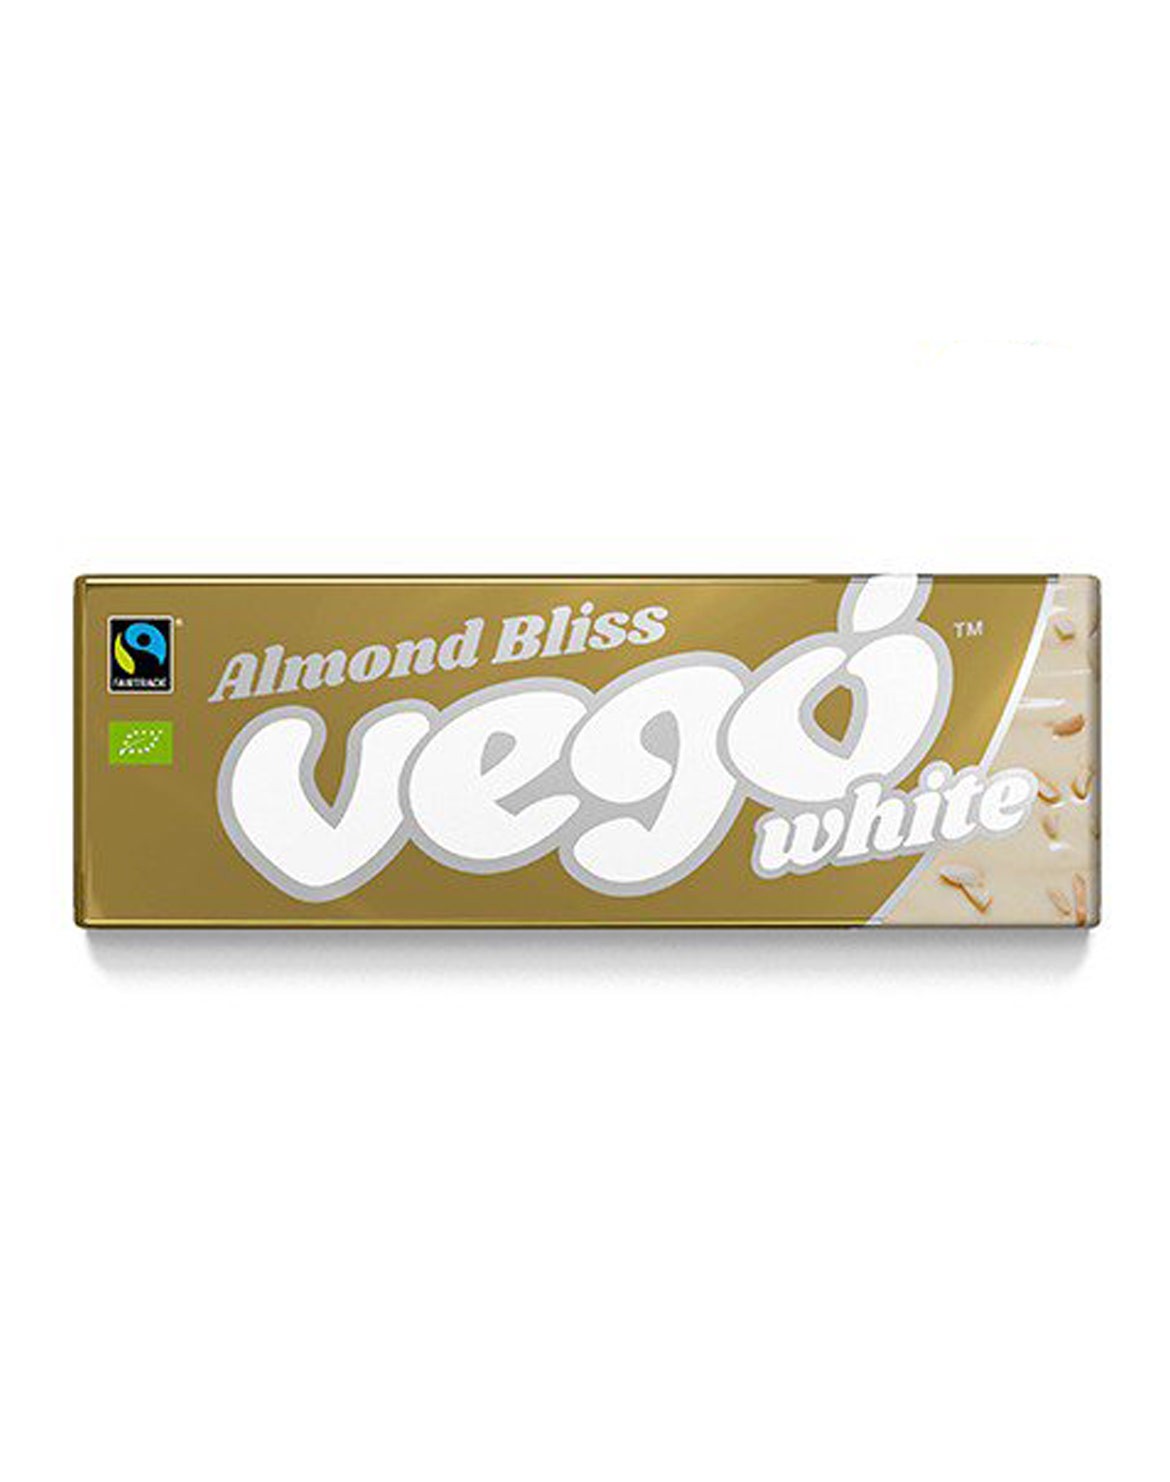 Vego WHITE Almond Bliss